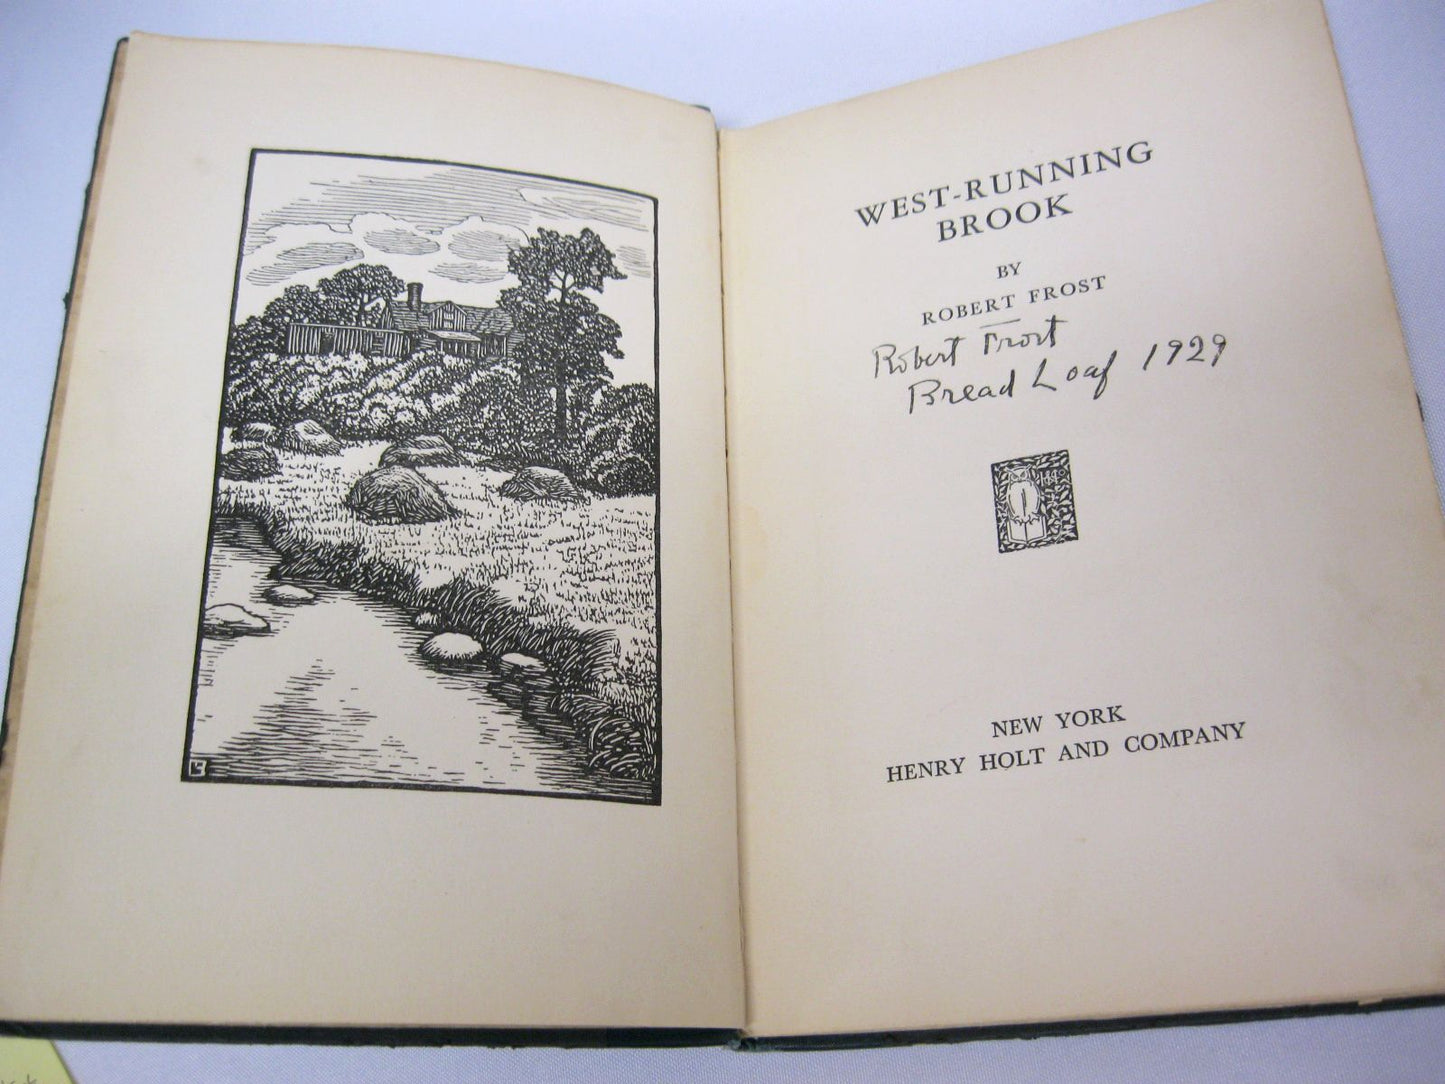 West-Running Brook by Robert Frost